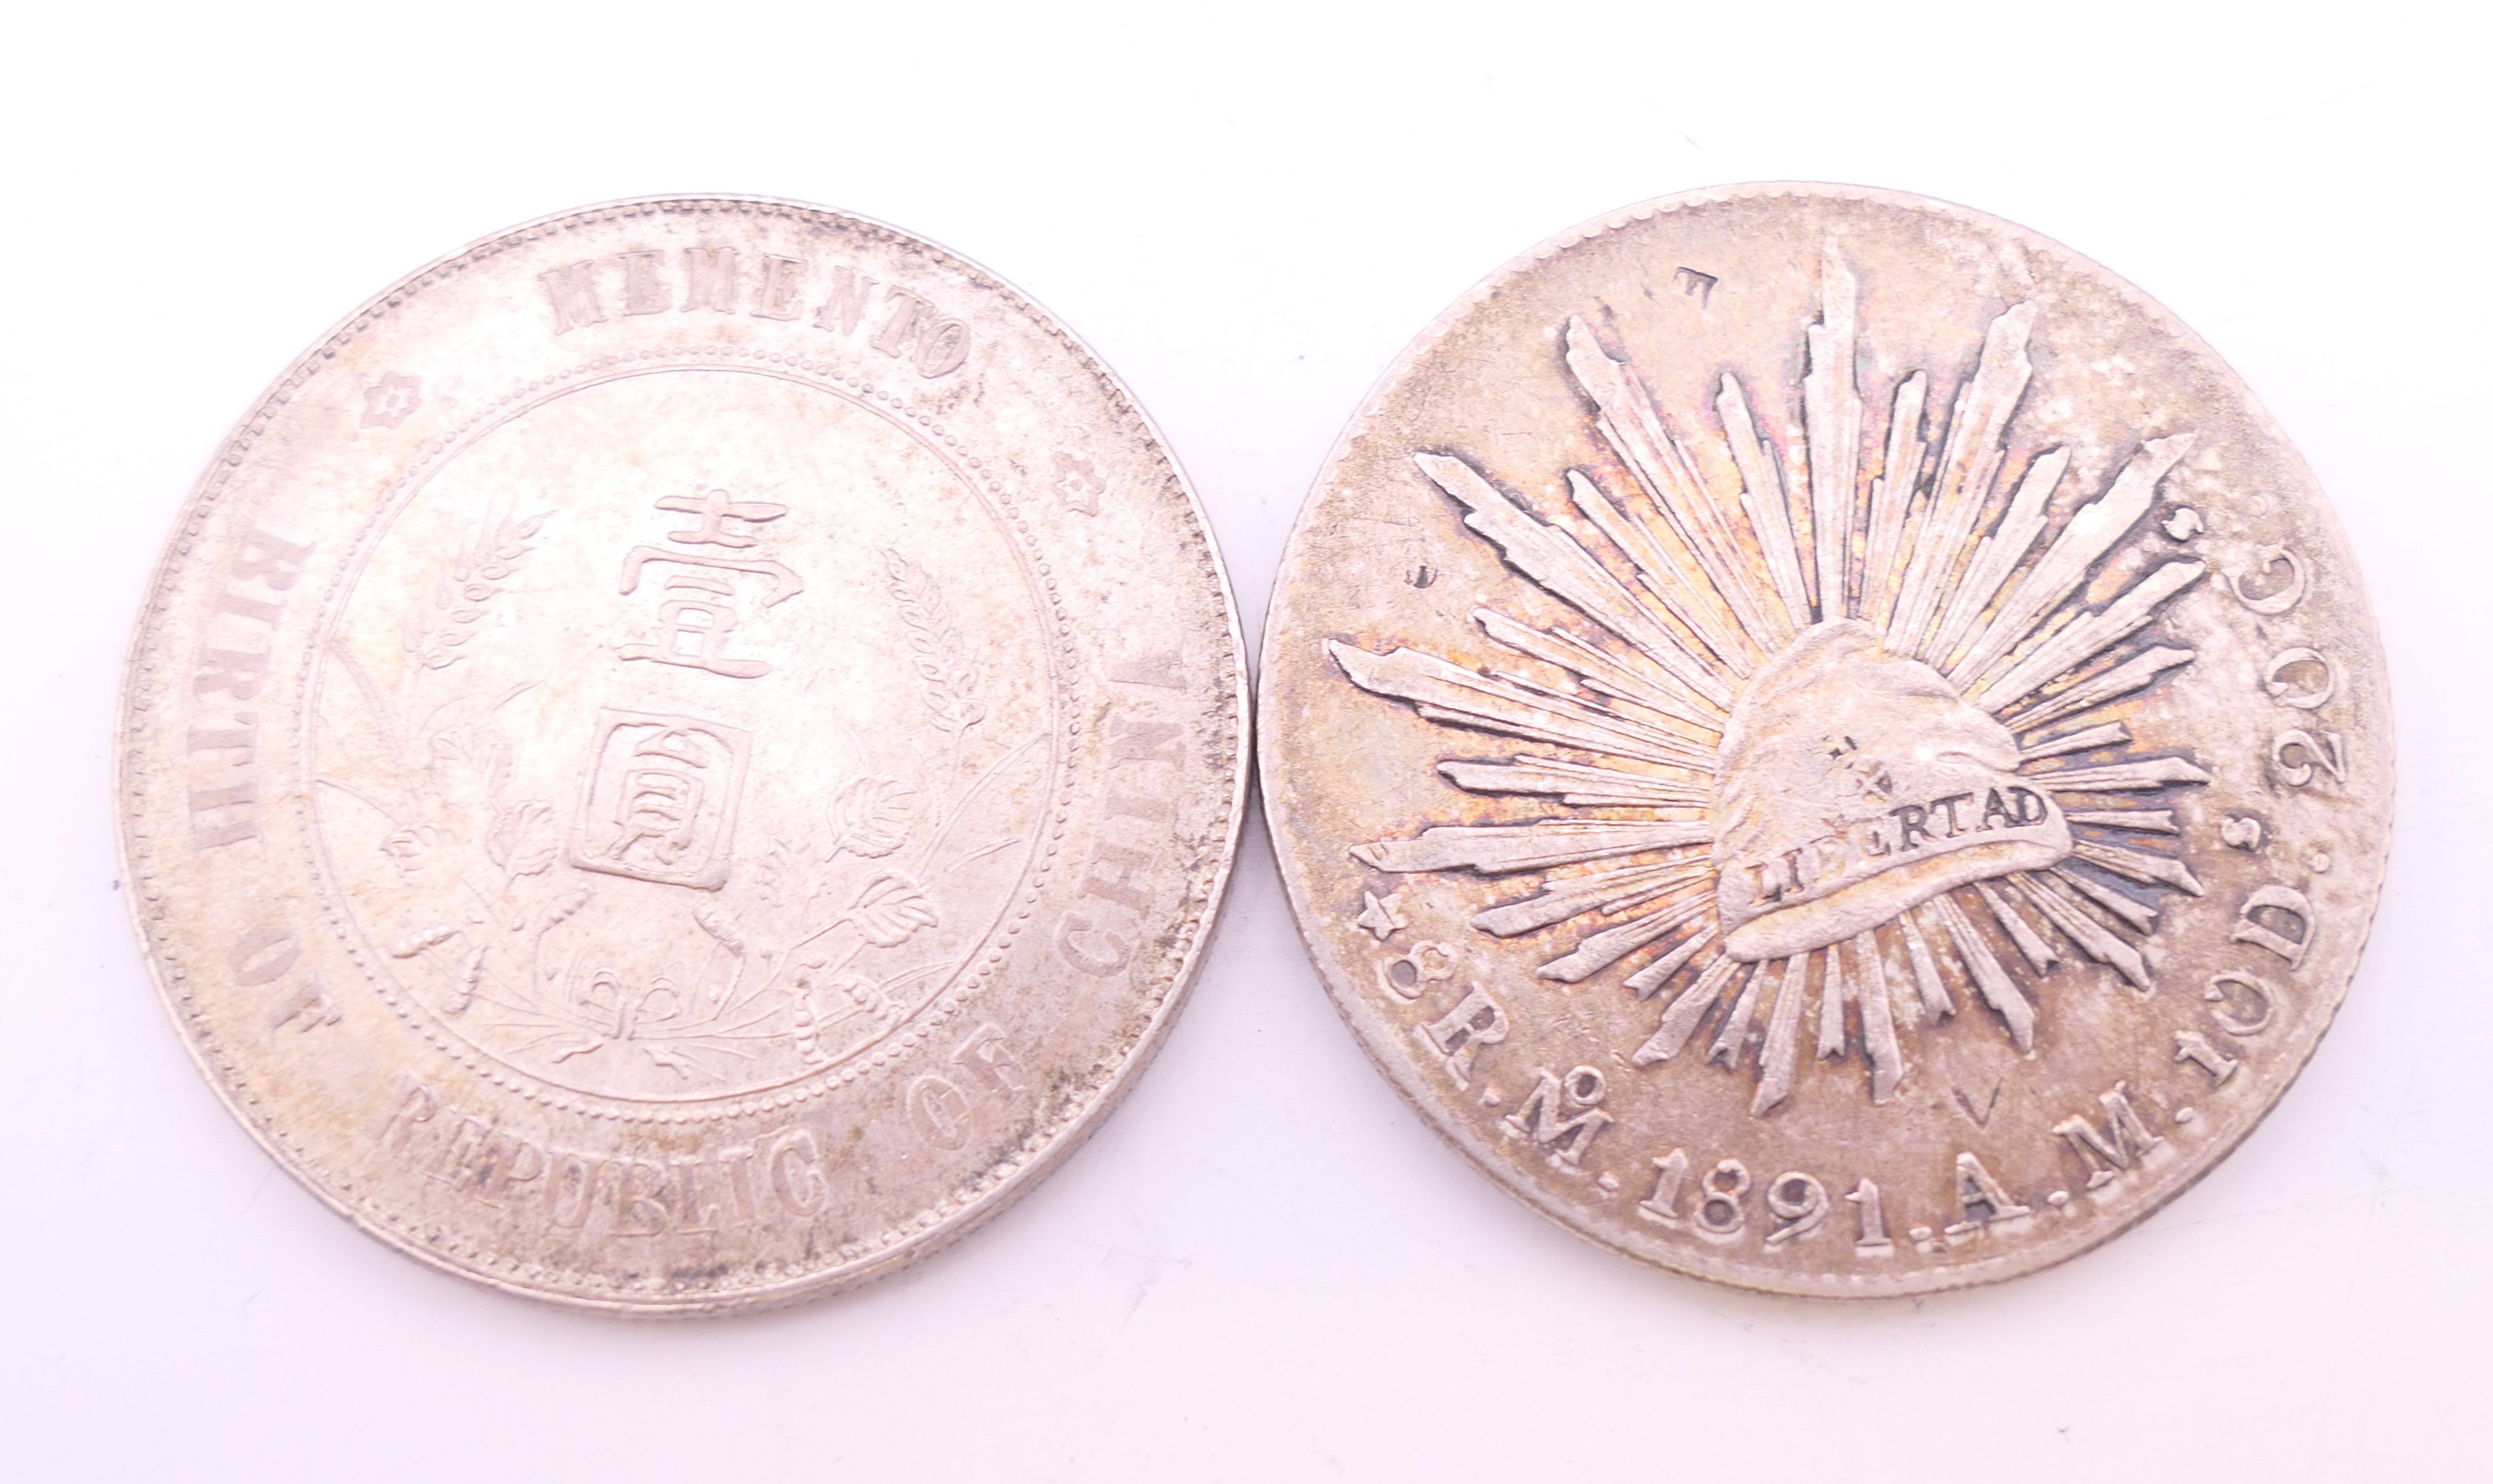 A Republic of Mexico silver coin and a Memento of the Birth of The Republic of China coin. - Image 2 of 3